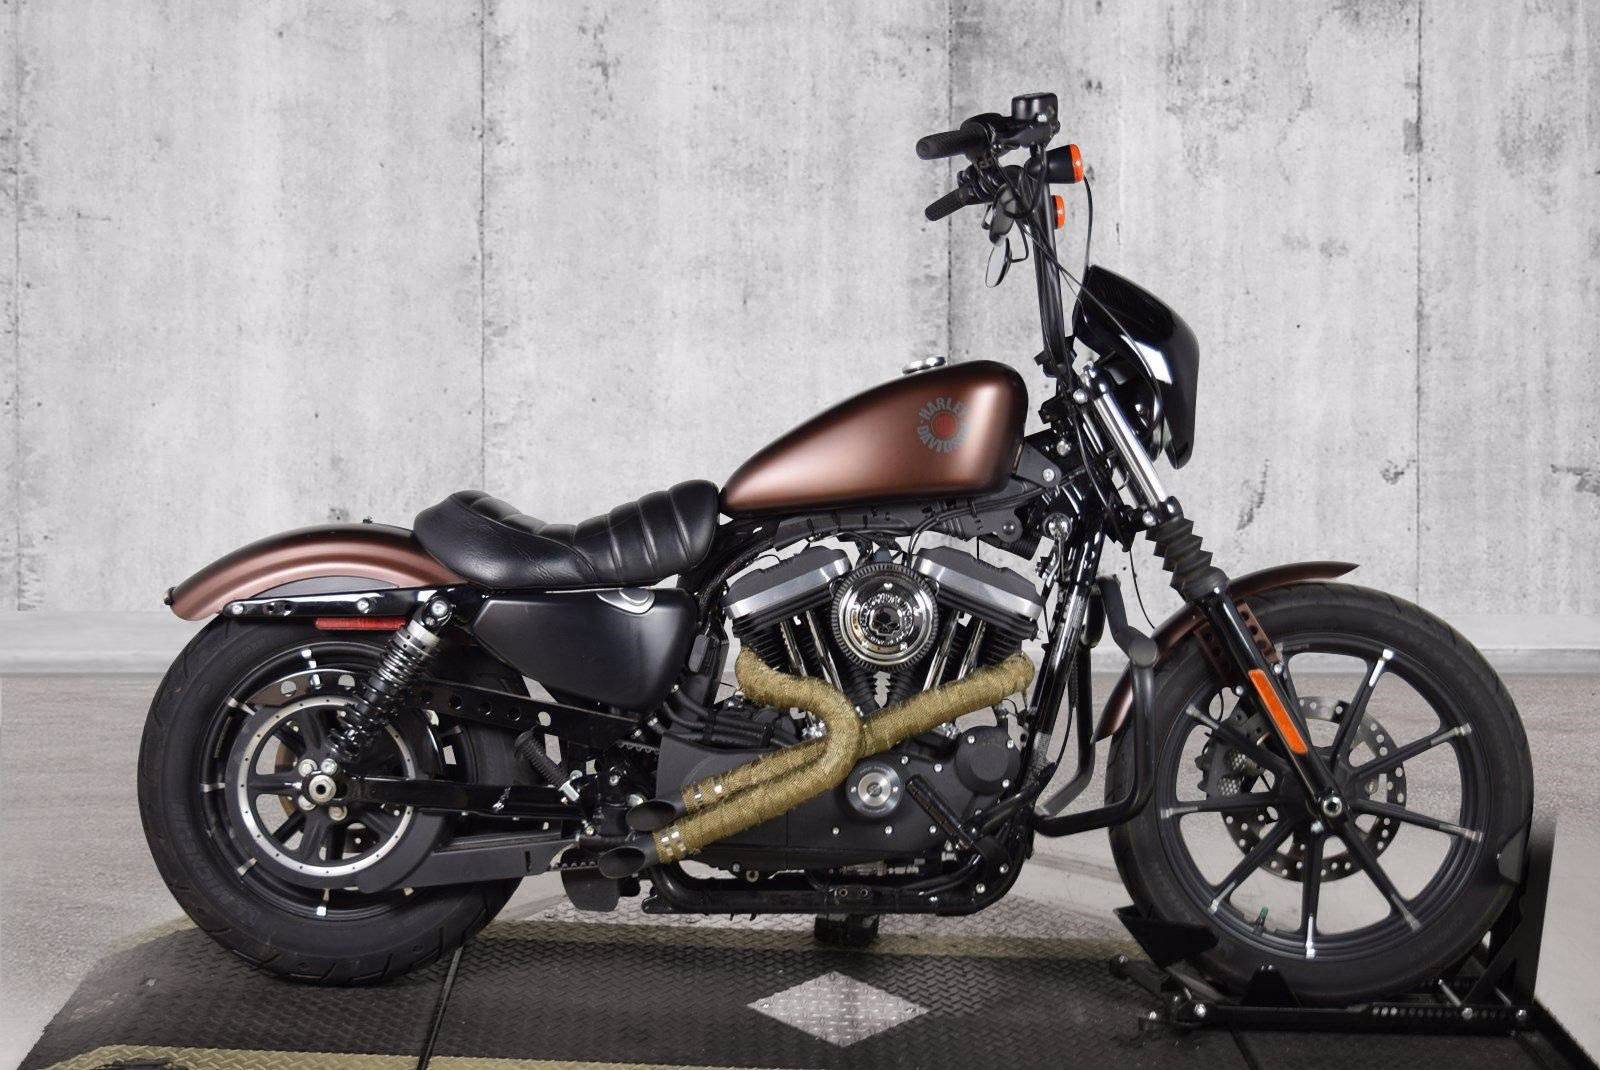 Harley-davidson sportster 883 (1993 - 2015) review | mcn